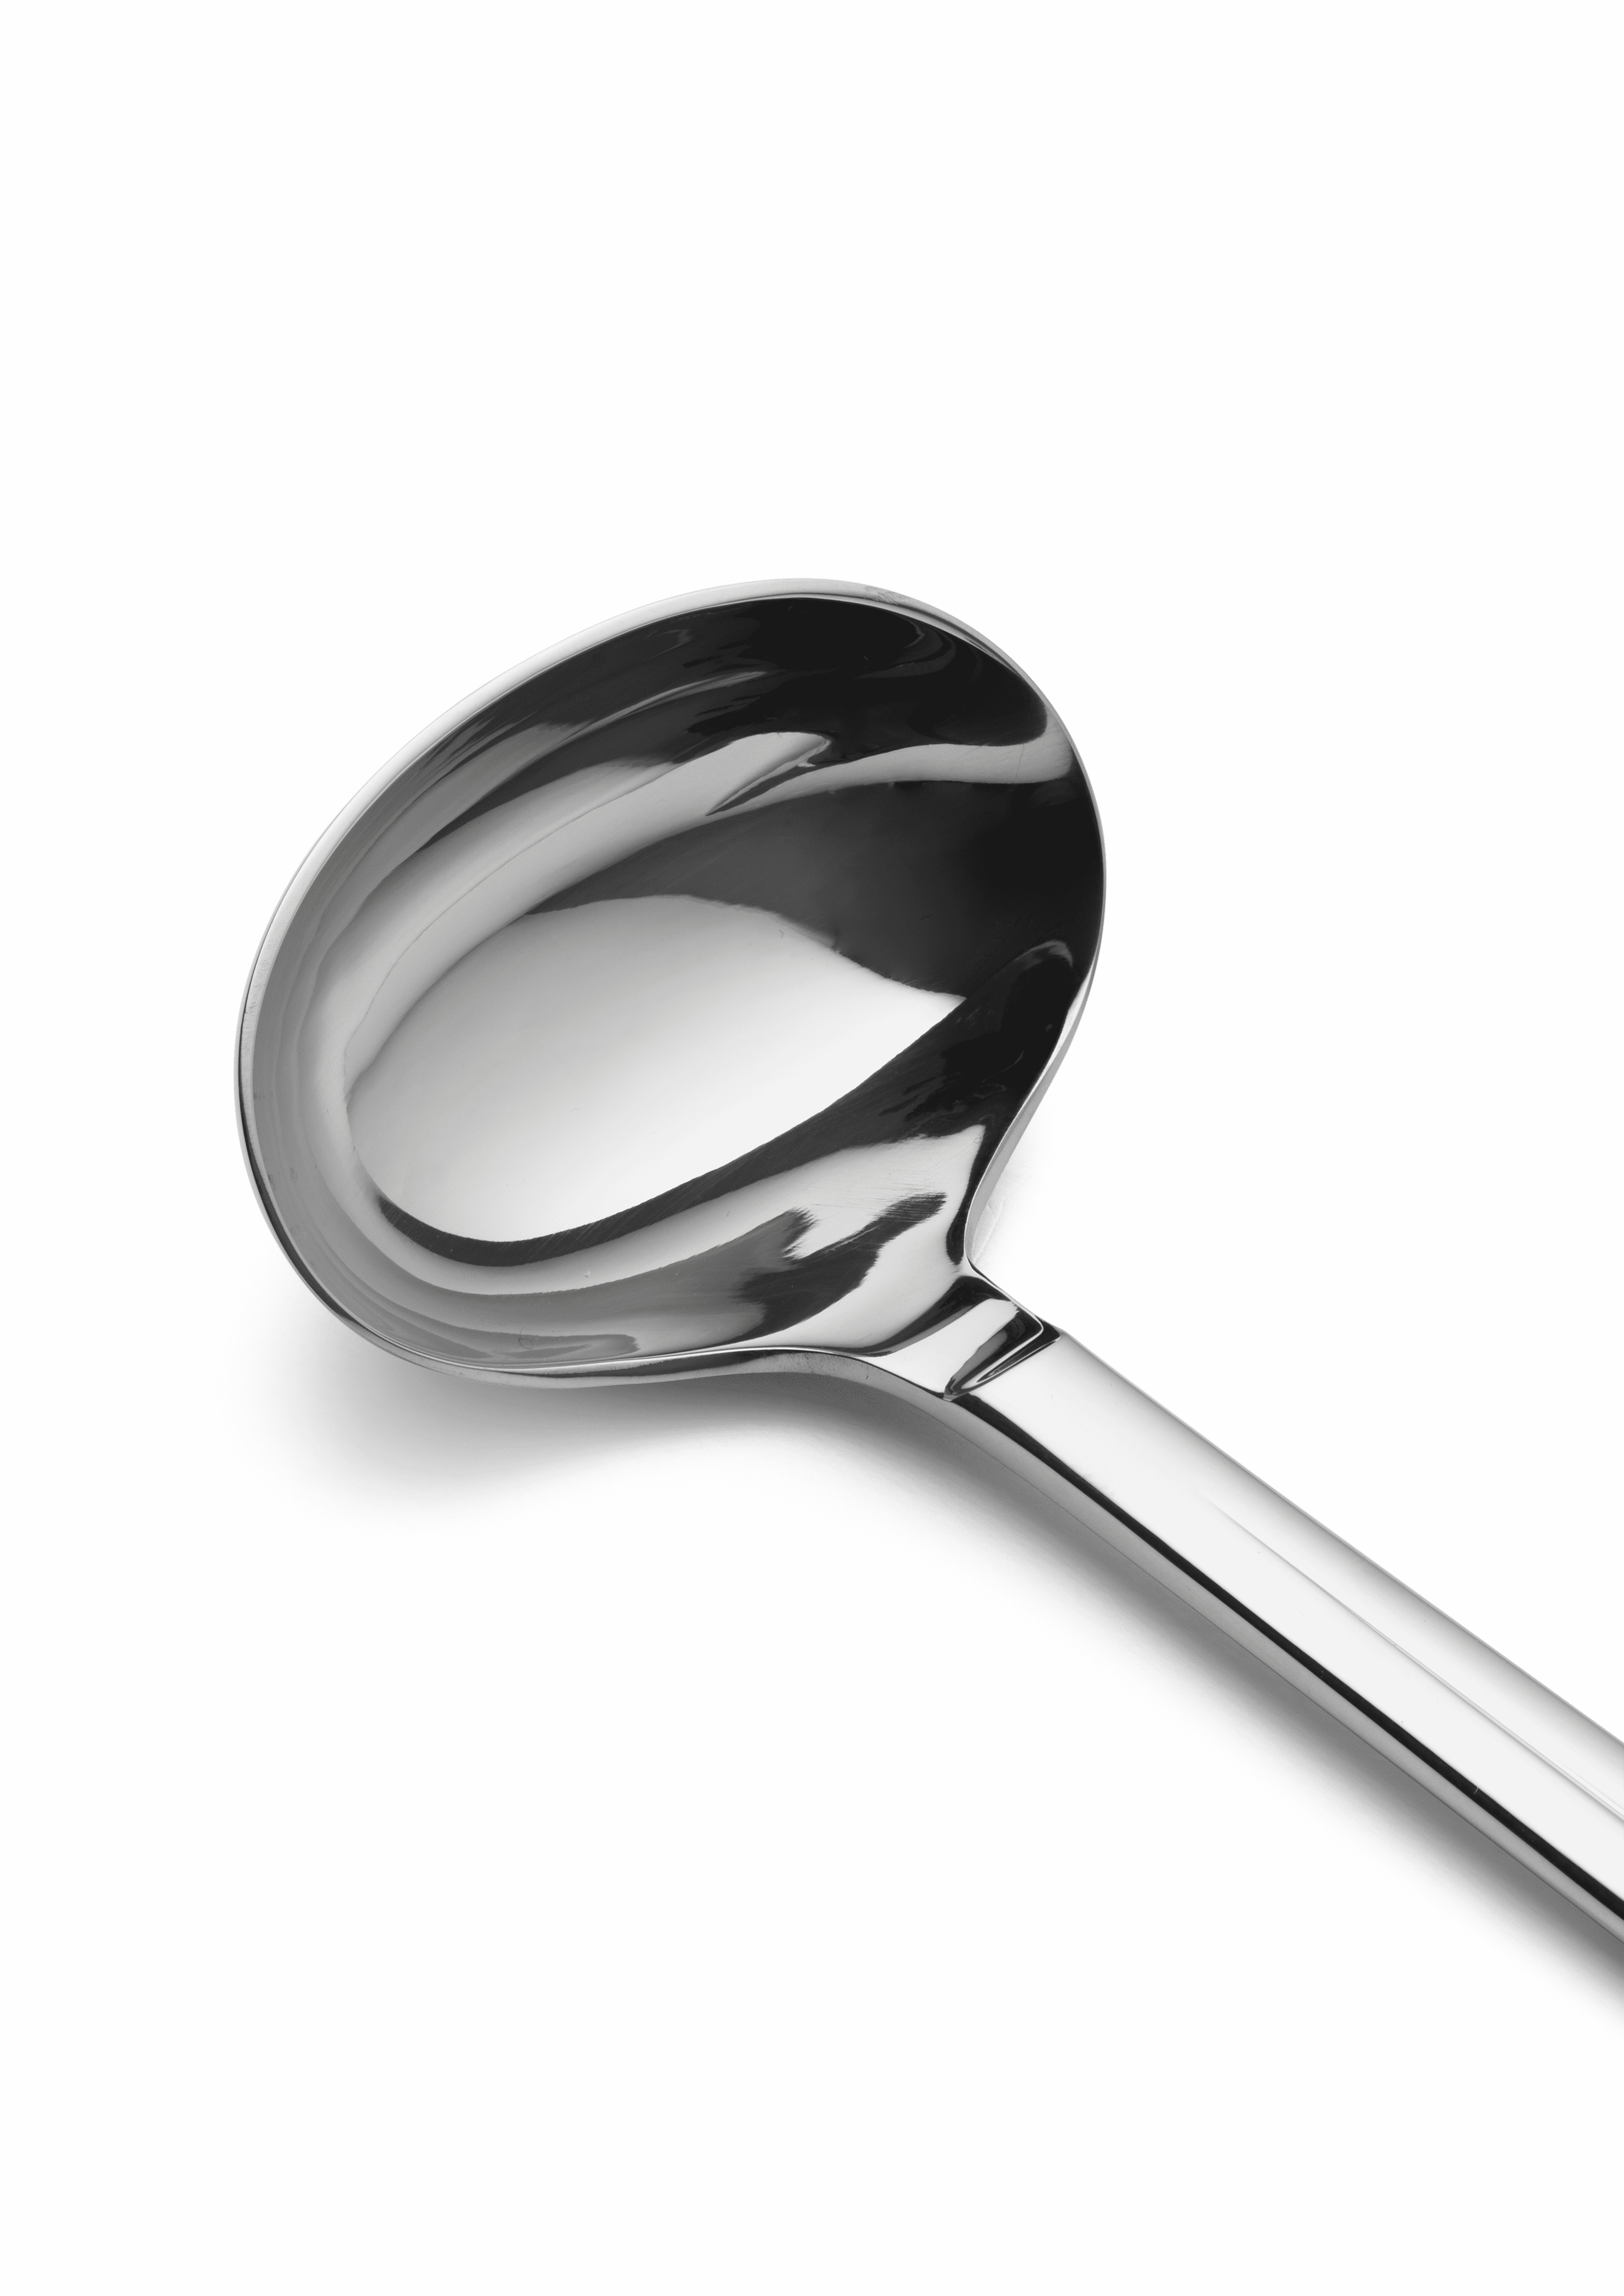 Sauce spoon